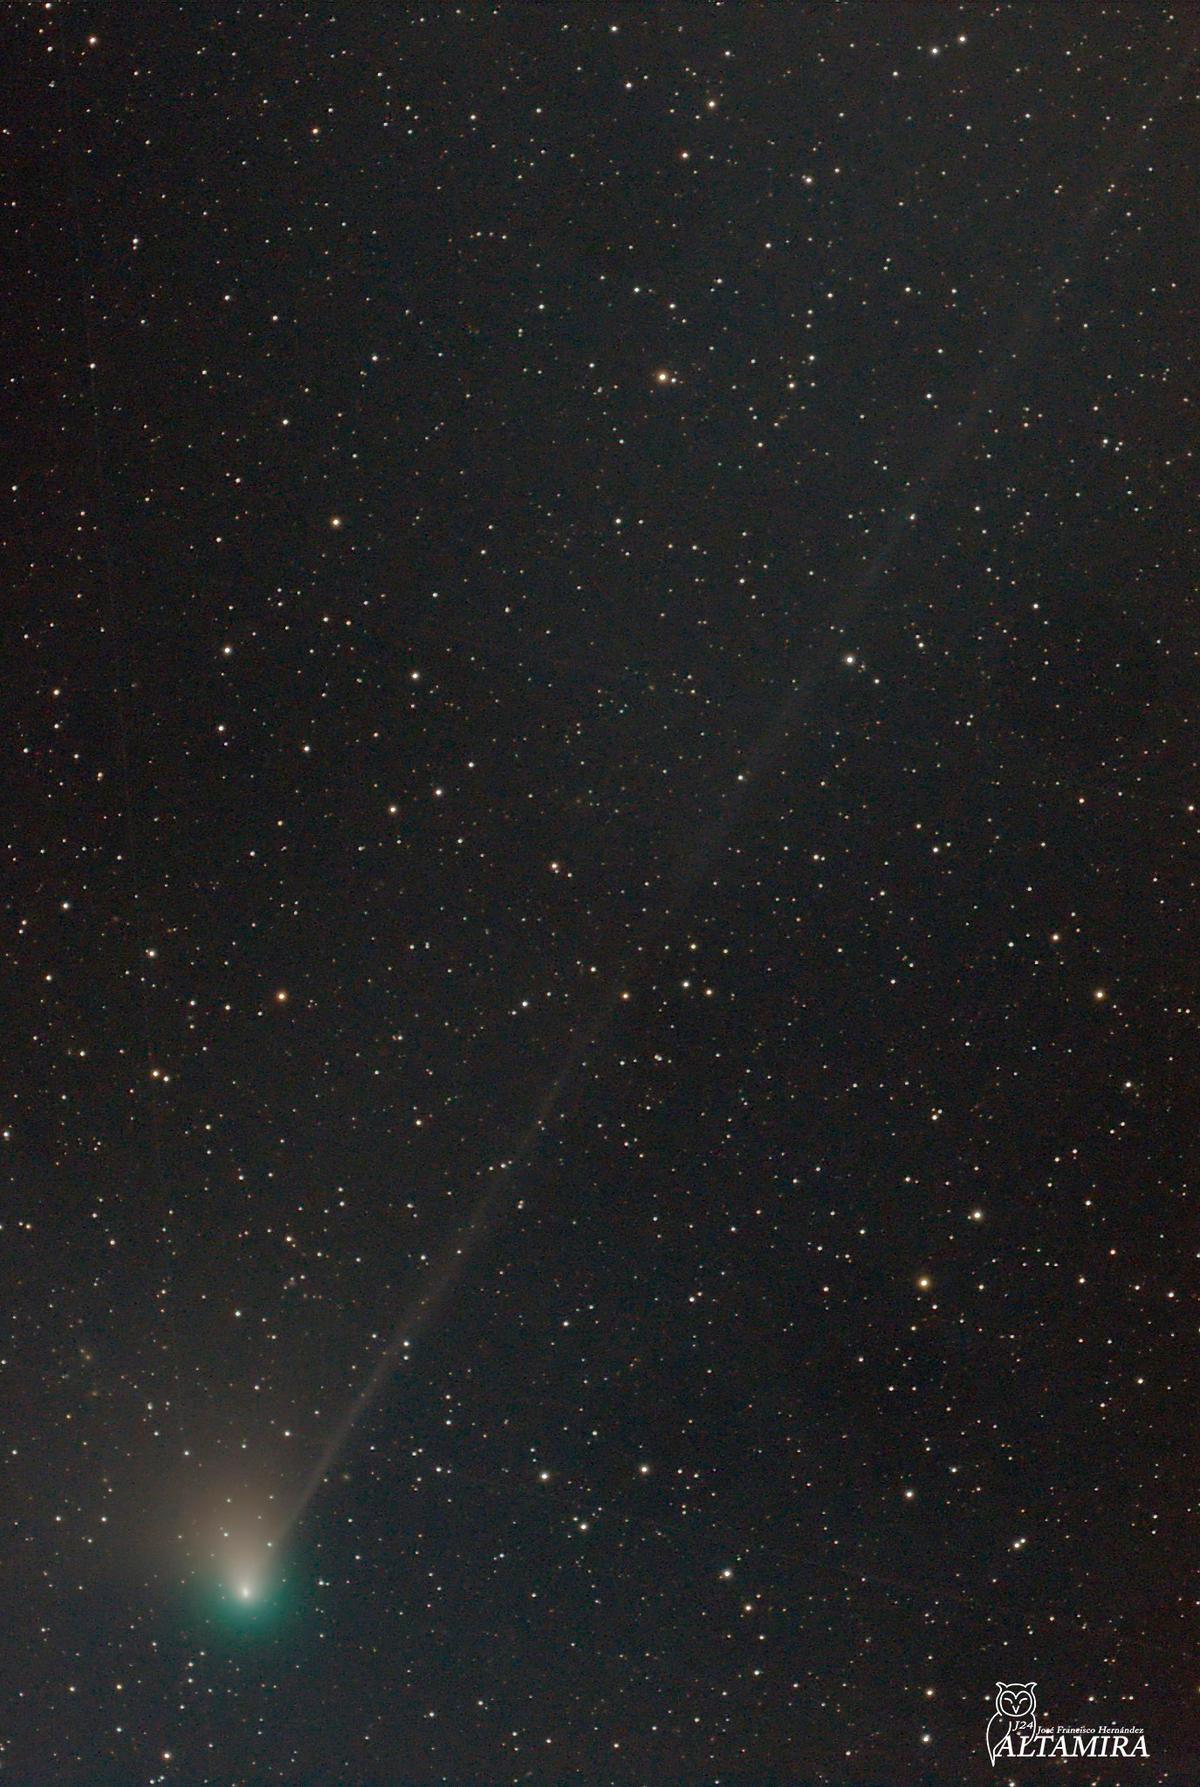 The comet grows brighter as it speeds toward the sun. (Courtesy of <a href="https://www.facebook.com/josefrancisco.hernandez.1048">Jose Francisco Hernandez</a>)